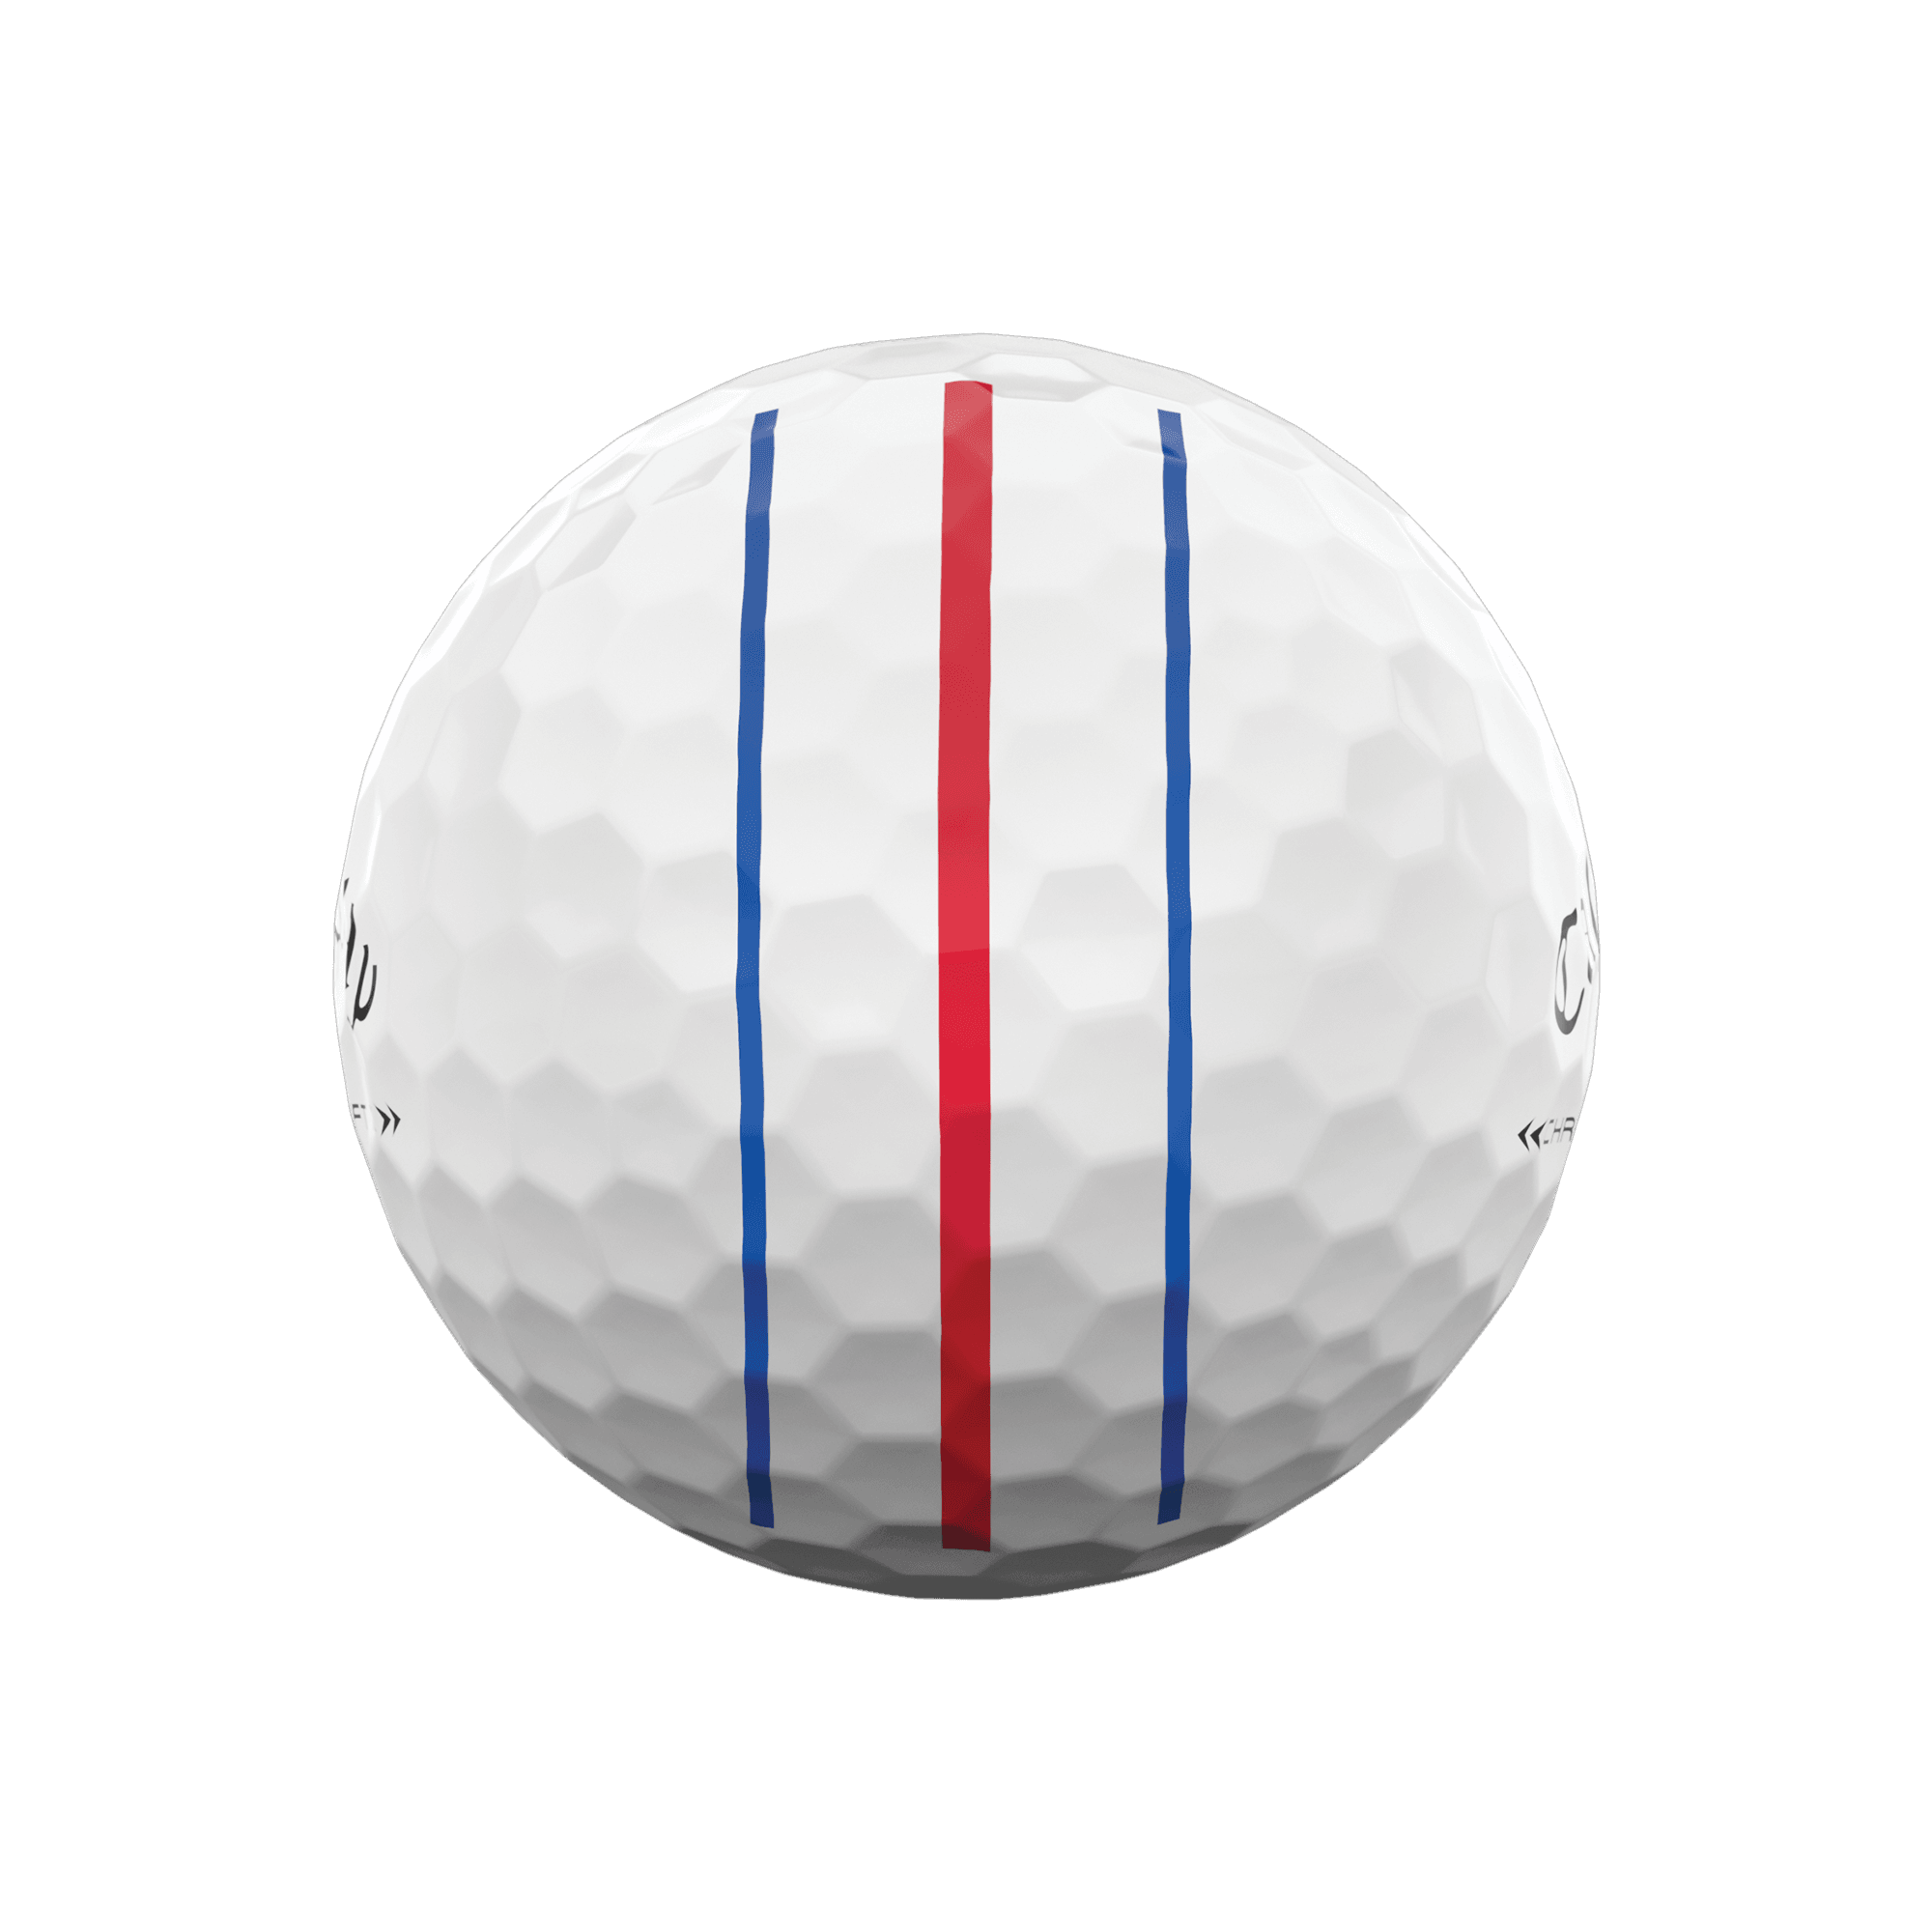 Chrome Soft X Triple Track Golf Balls | Callaway Golf